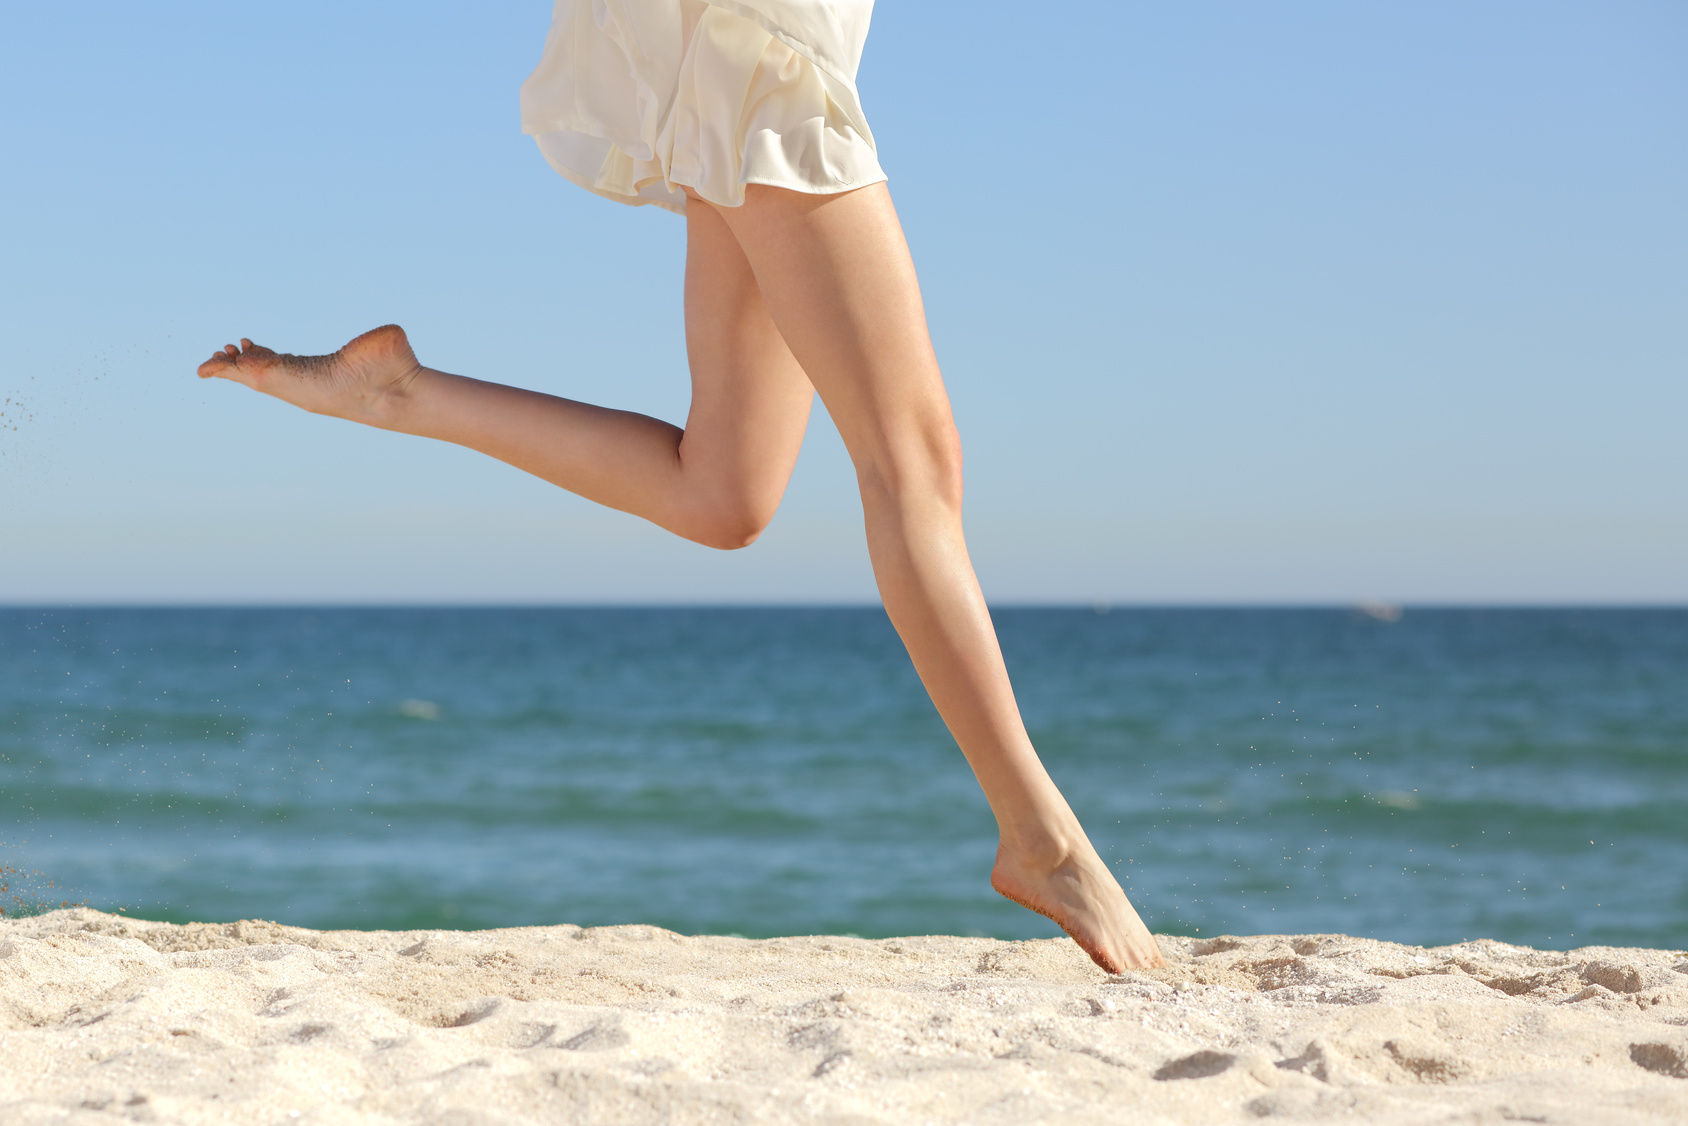 Beautiful woman long legs jumping on the beach